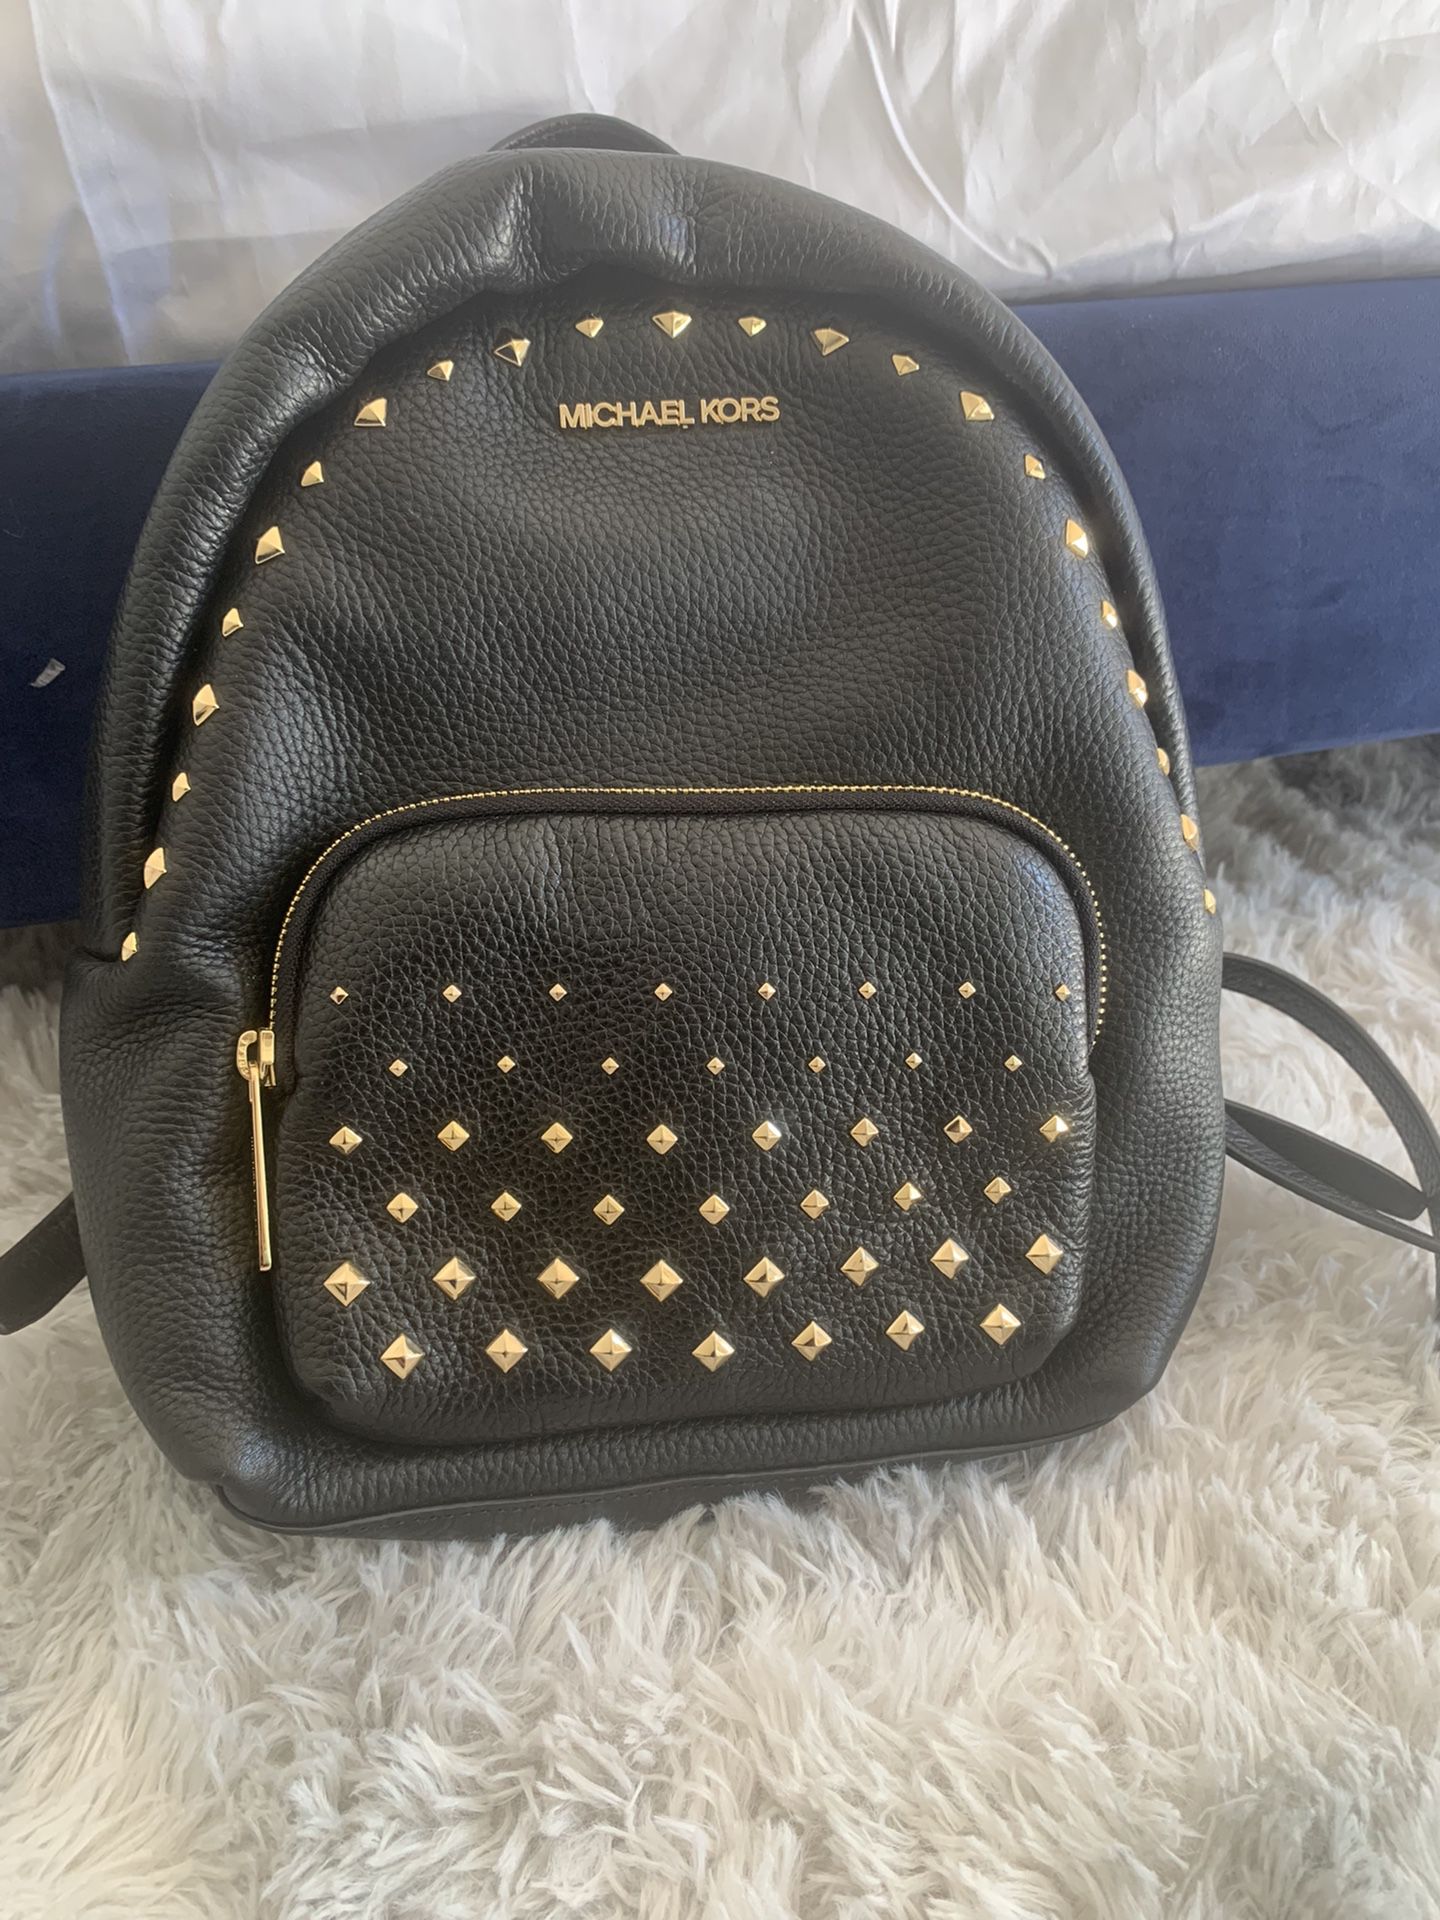 Micheal Kors gold diamond studded backpack